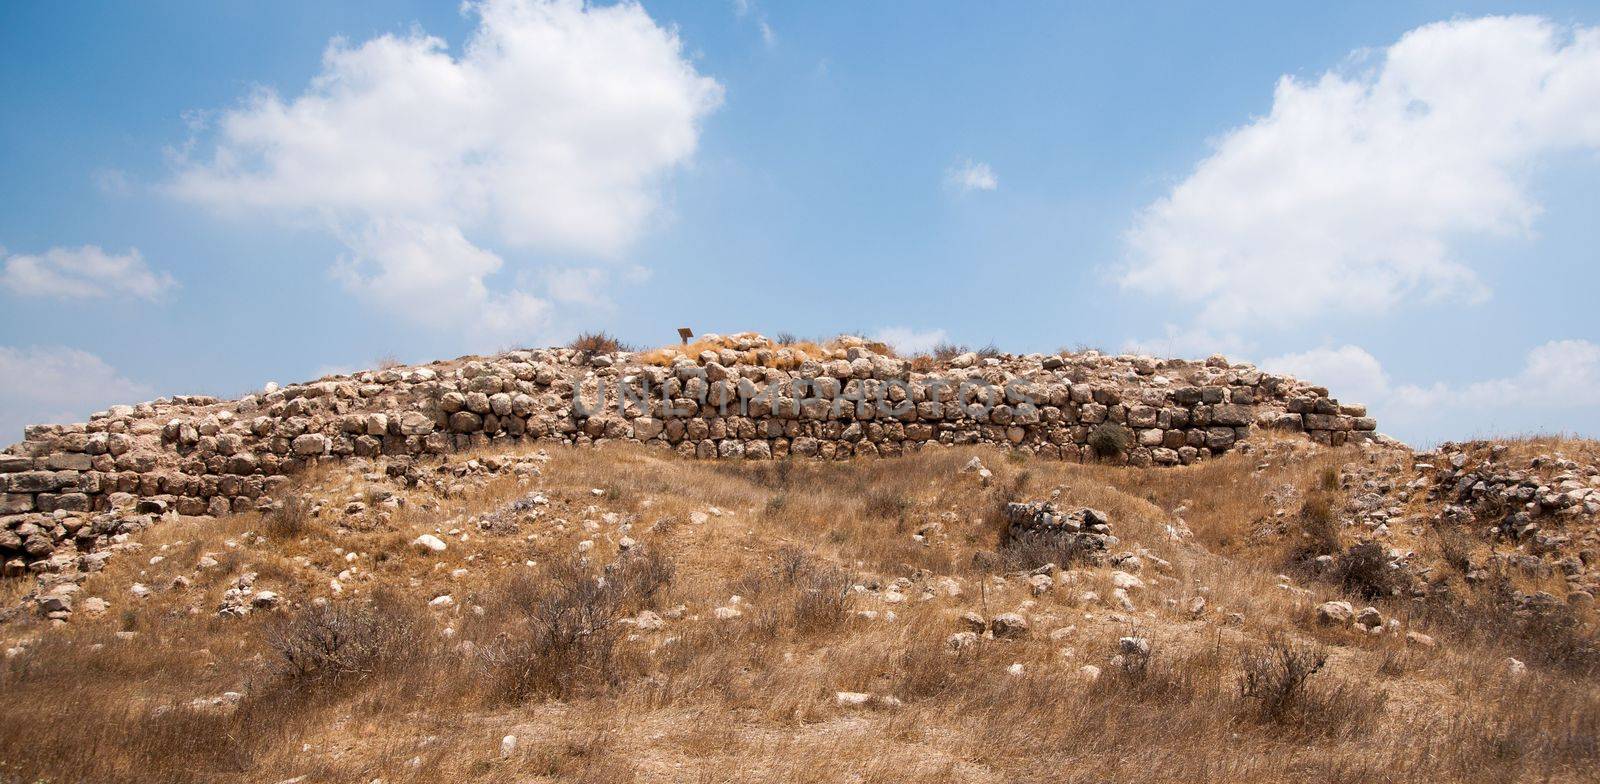 Archaeology excavations in Israel by javax